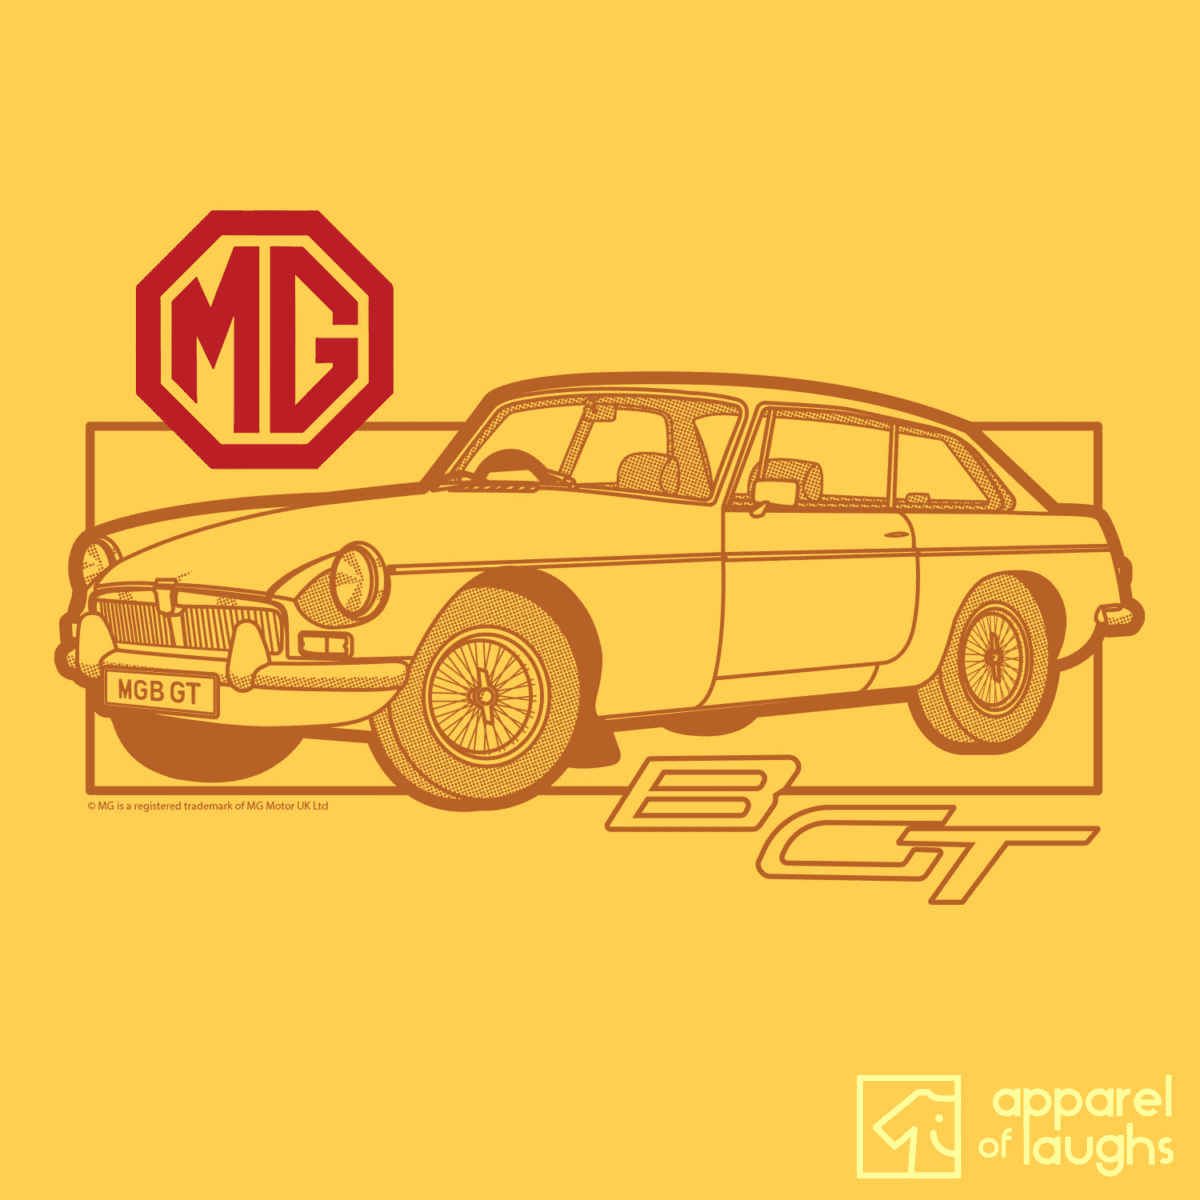 MG MGB GT Car Brand Vintage Retro British Leyland Motoring Automotive T-Shirt Design Daisy